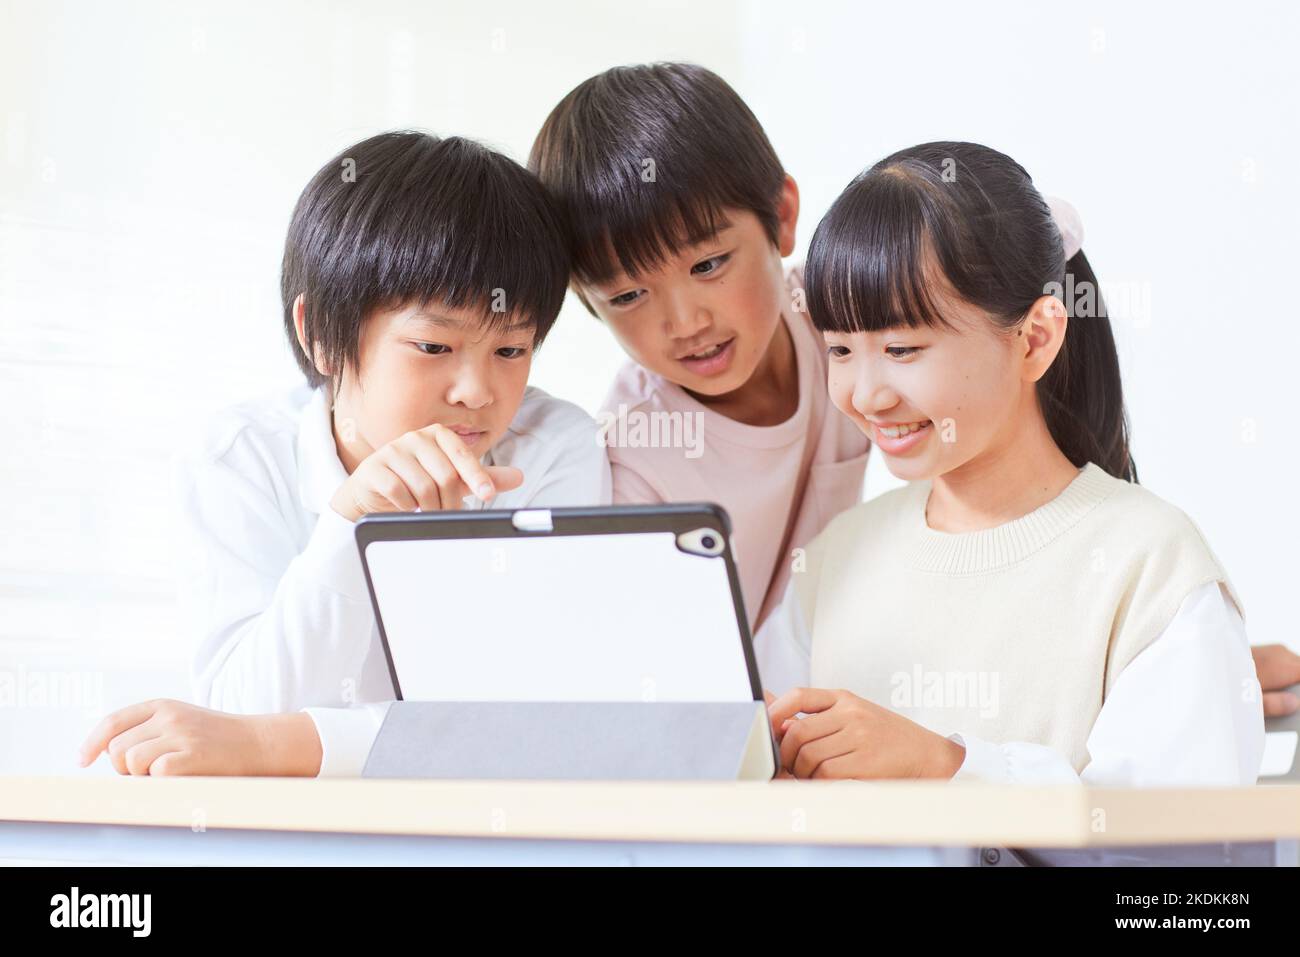 Japanese kids using tablet Stock Photo